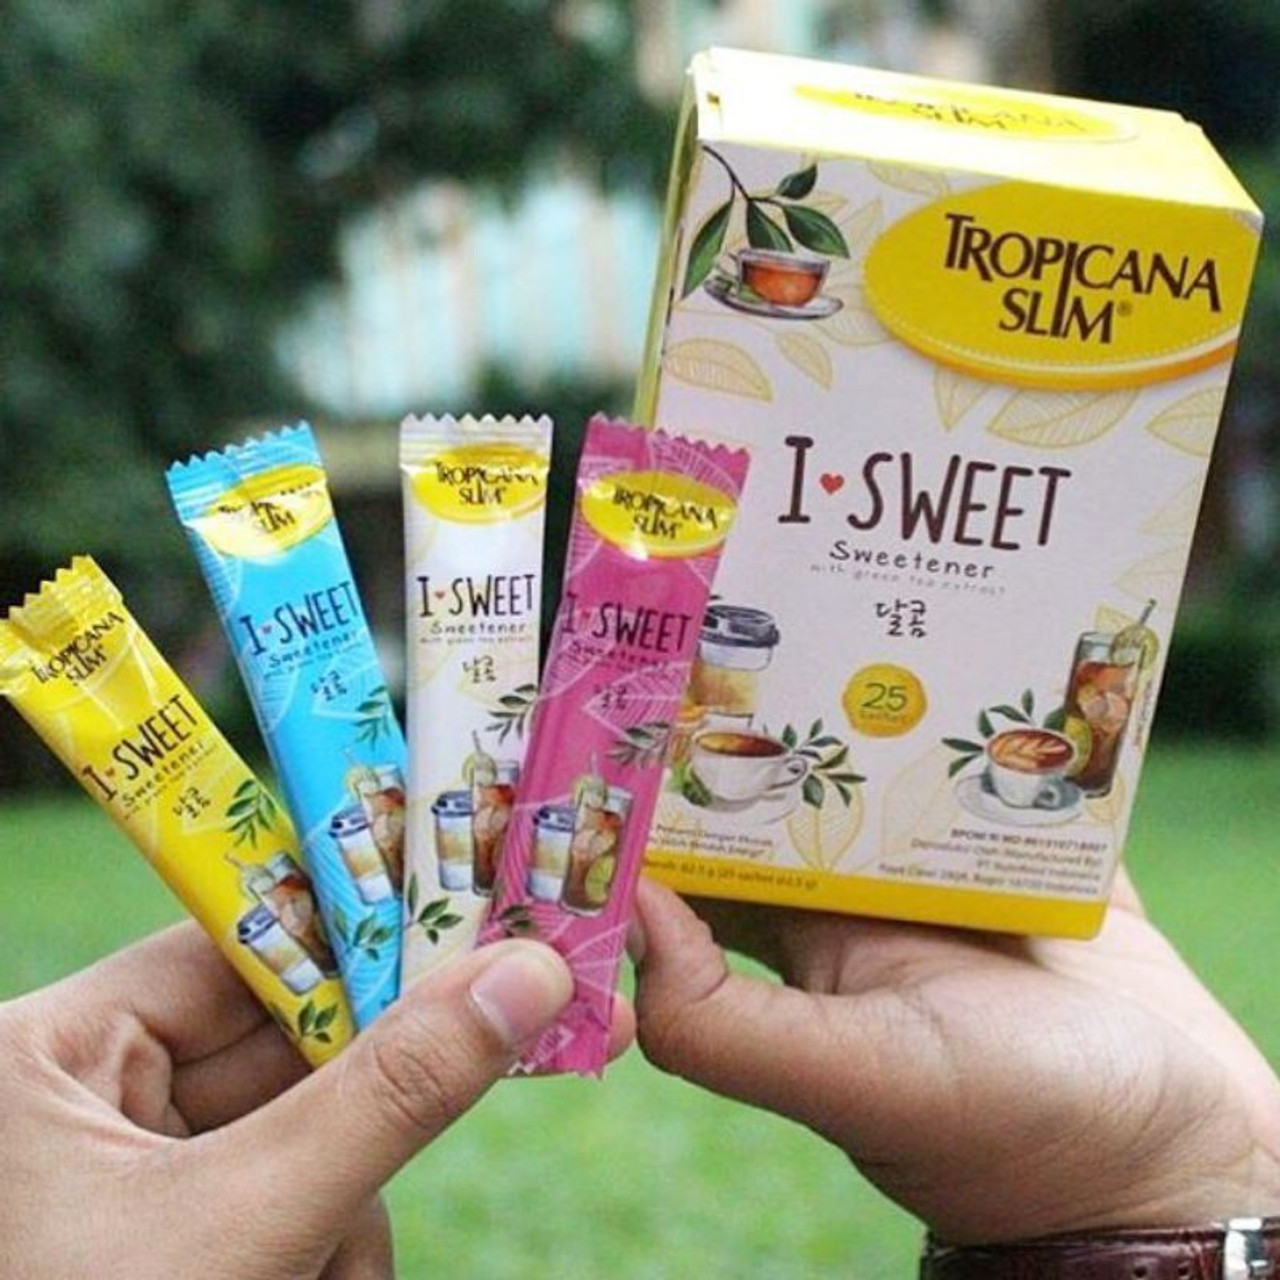 Tropicana Slim Sweetener I-Sweet 25 sachets